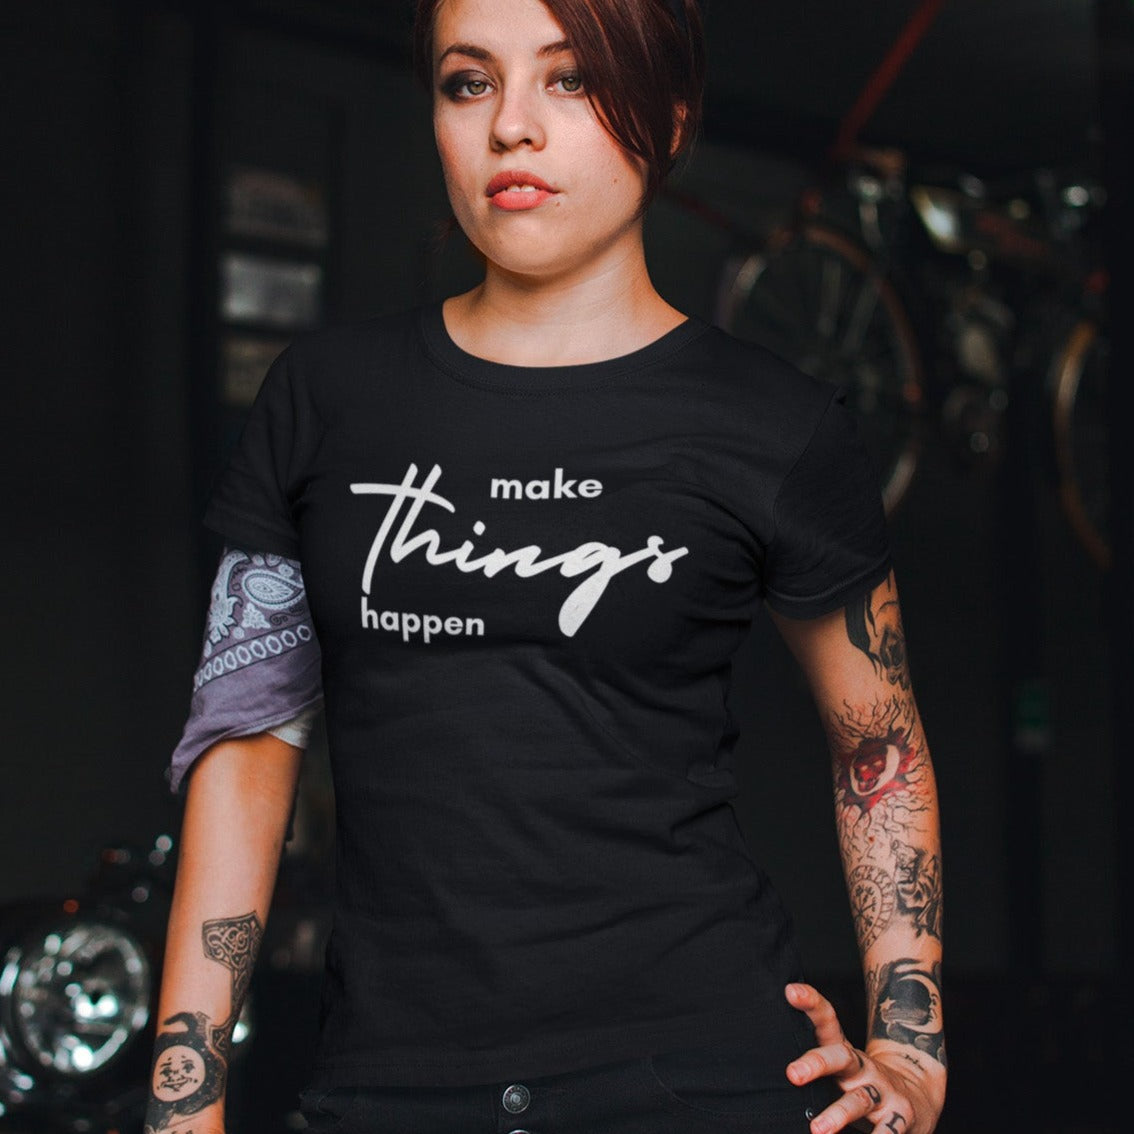 make-things-happen-black-t-shirt-women-inspiring-mockup-featuring-a-biker-woman-with-multiple-tattoos